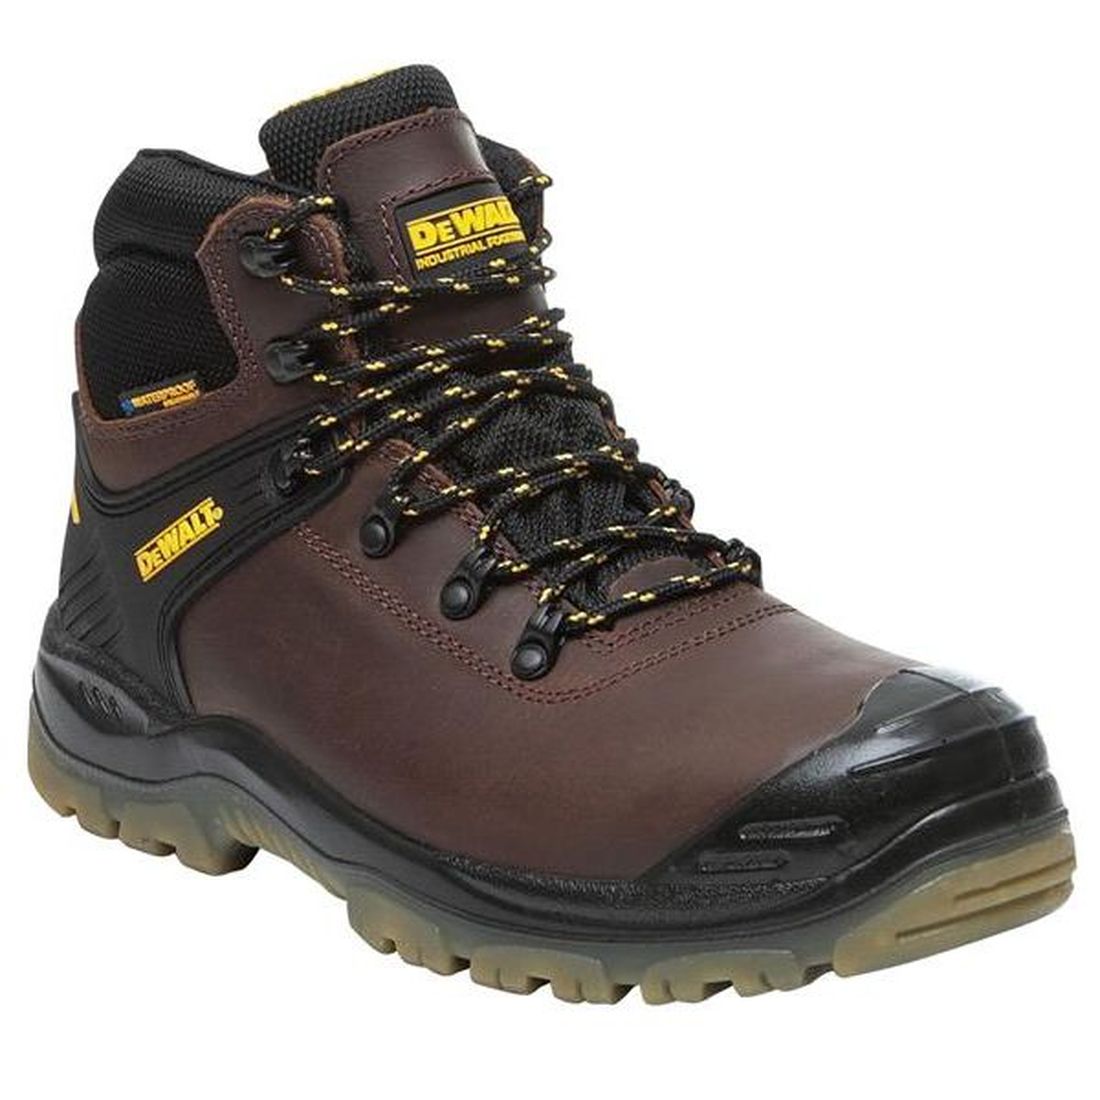 DEWALT Newark S3 Waterproof Safety Hiker Boots Brown UK 10 EUR 45                      